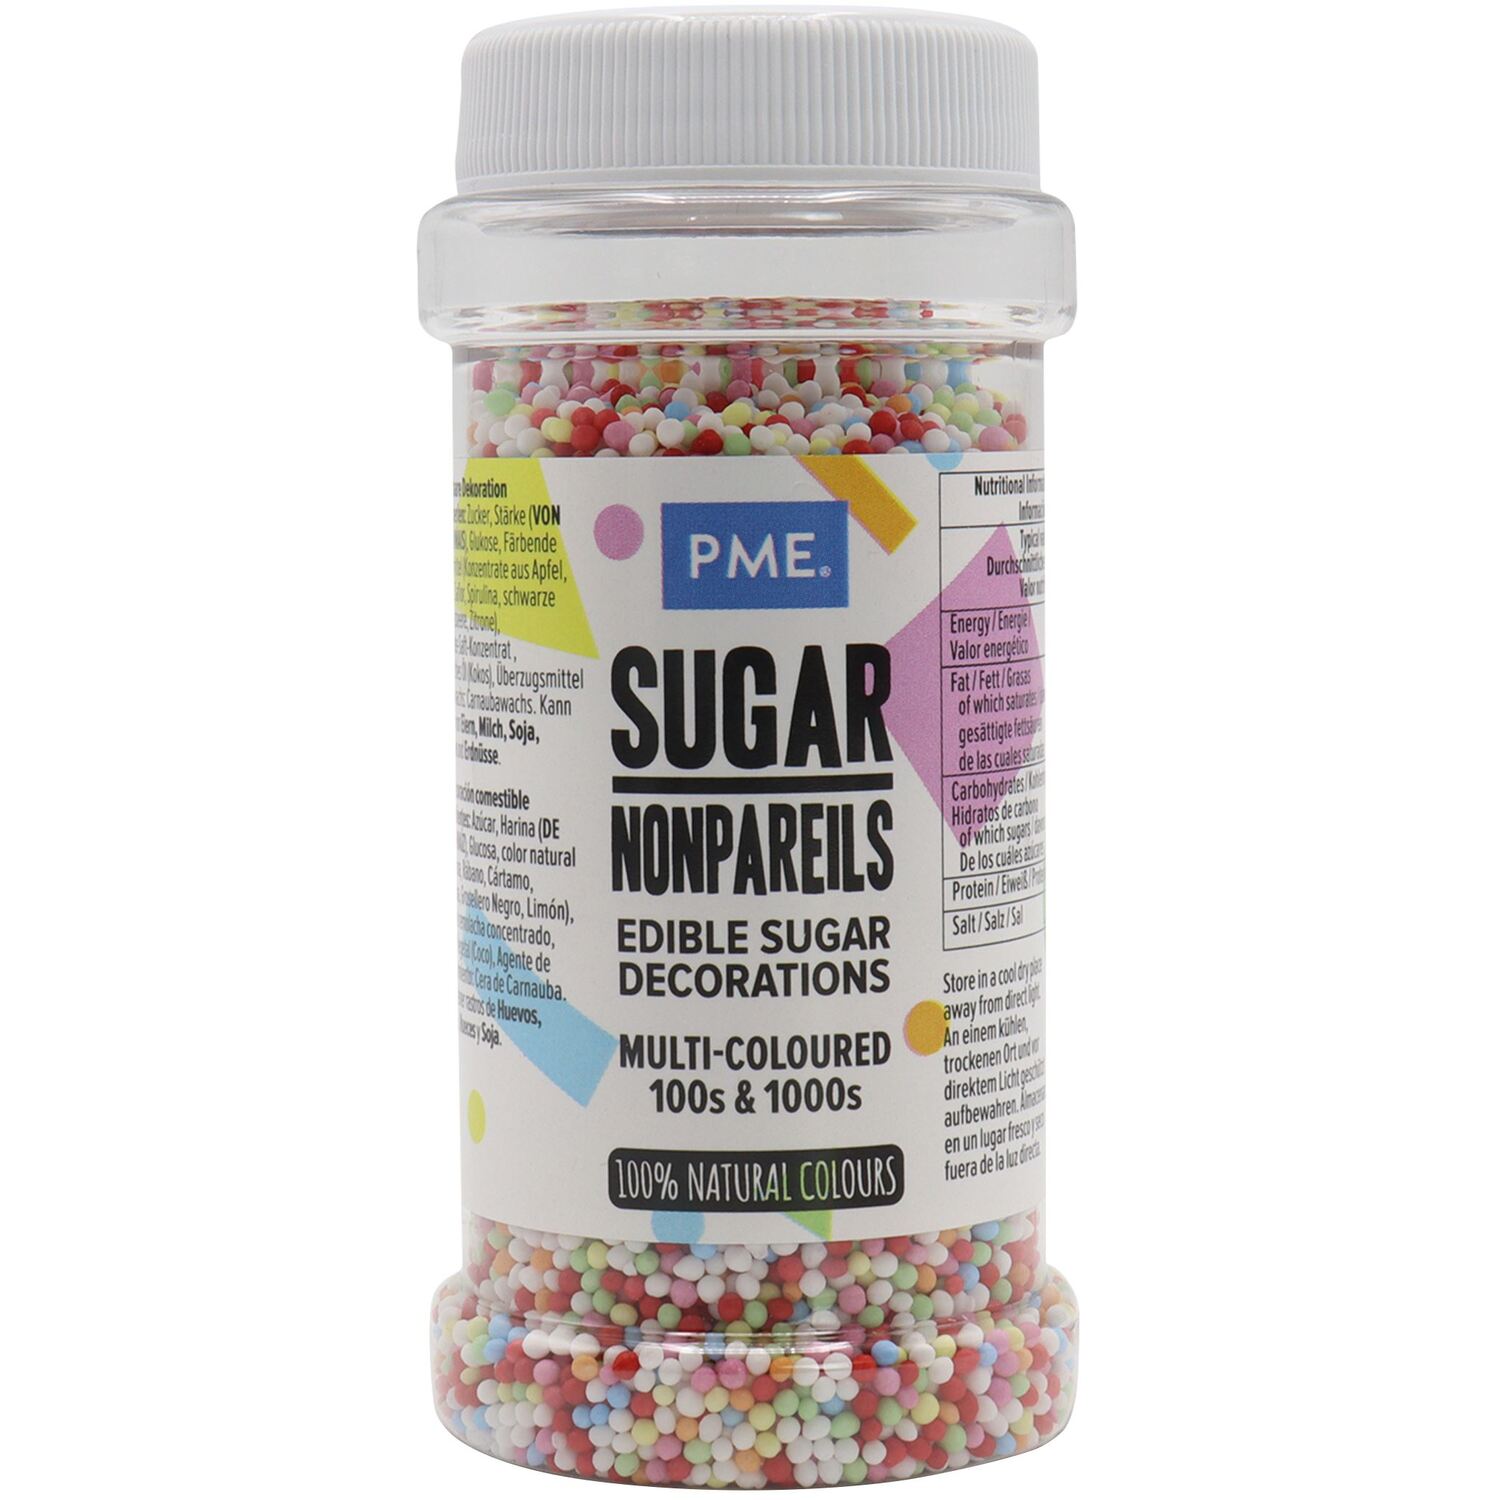 PME Sugar Nonpareils Edible Sugar Decorations Image